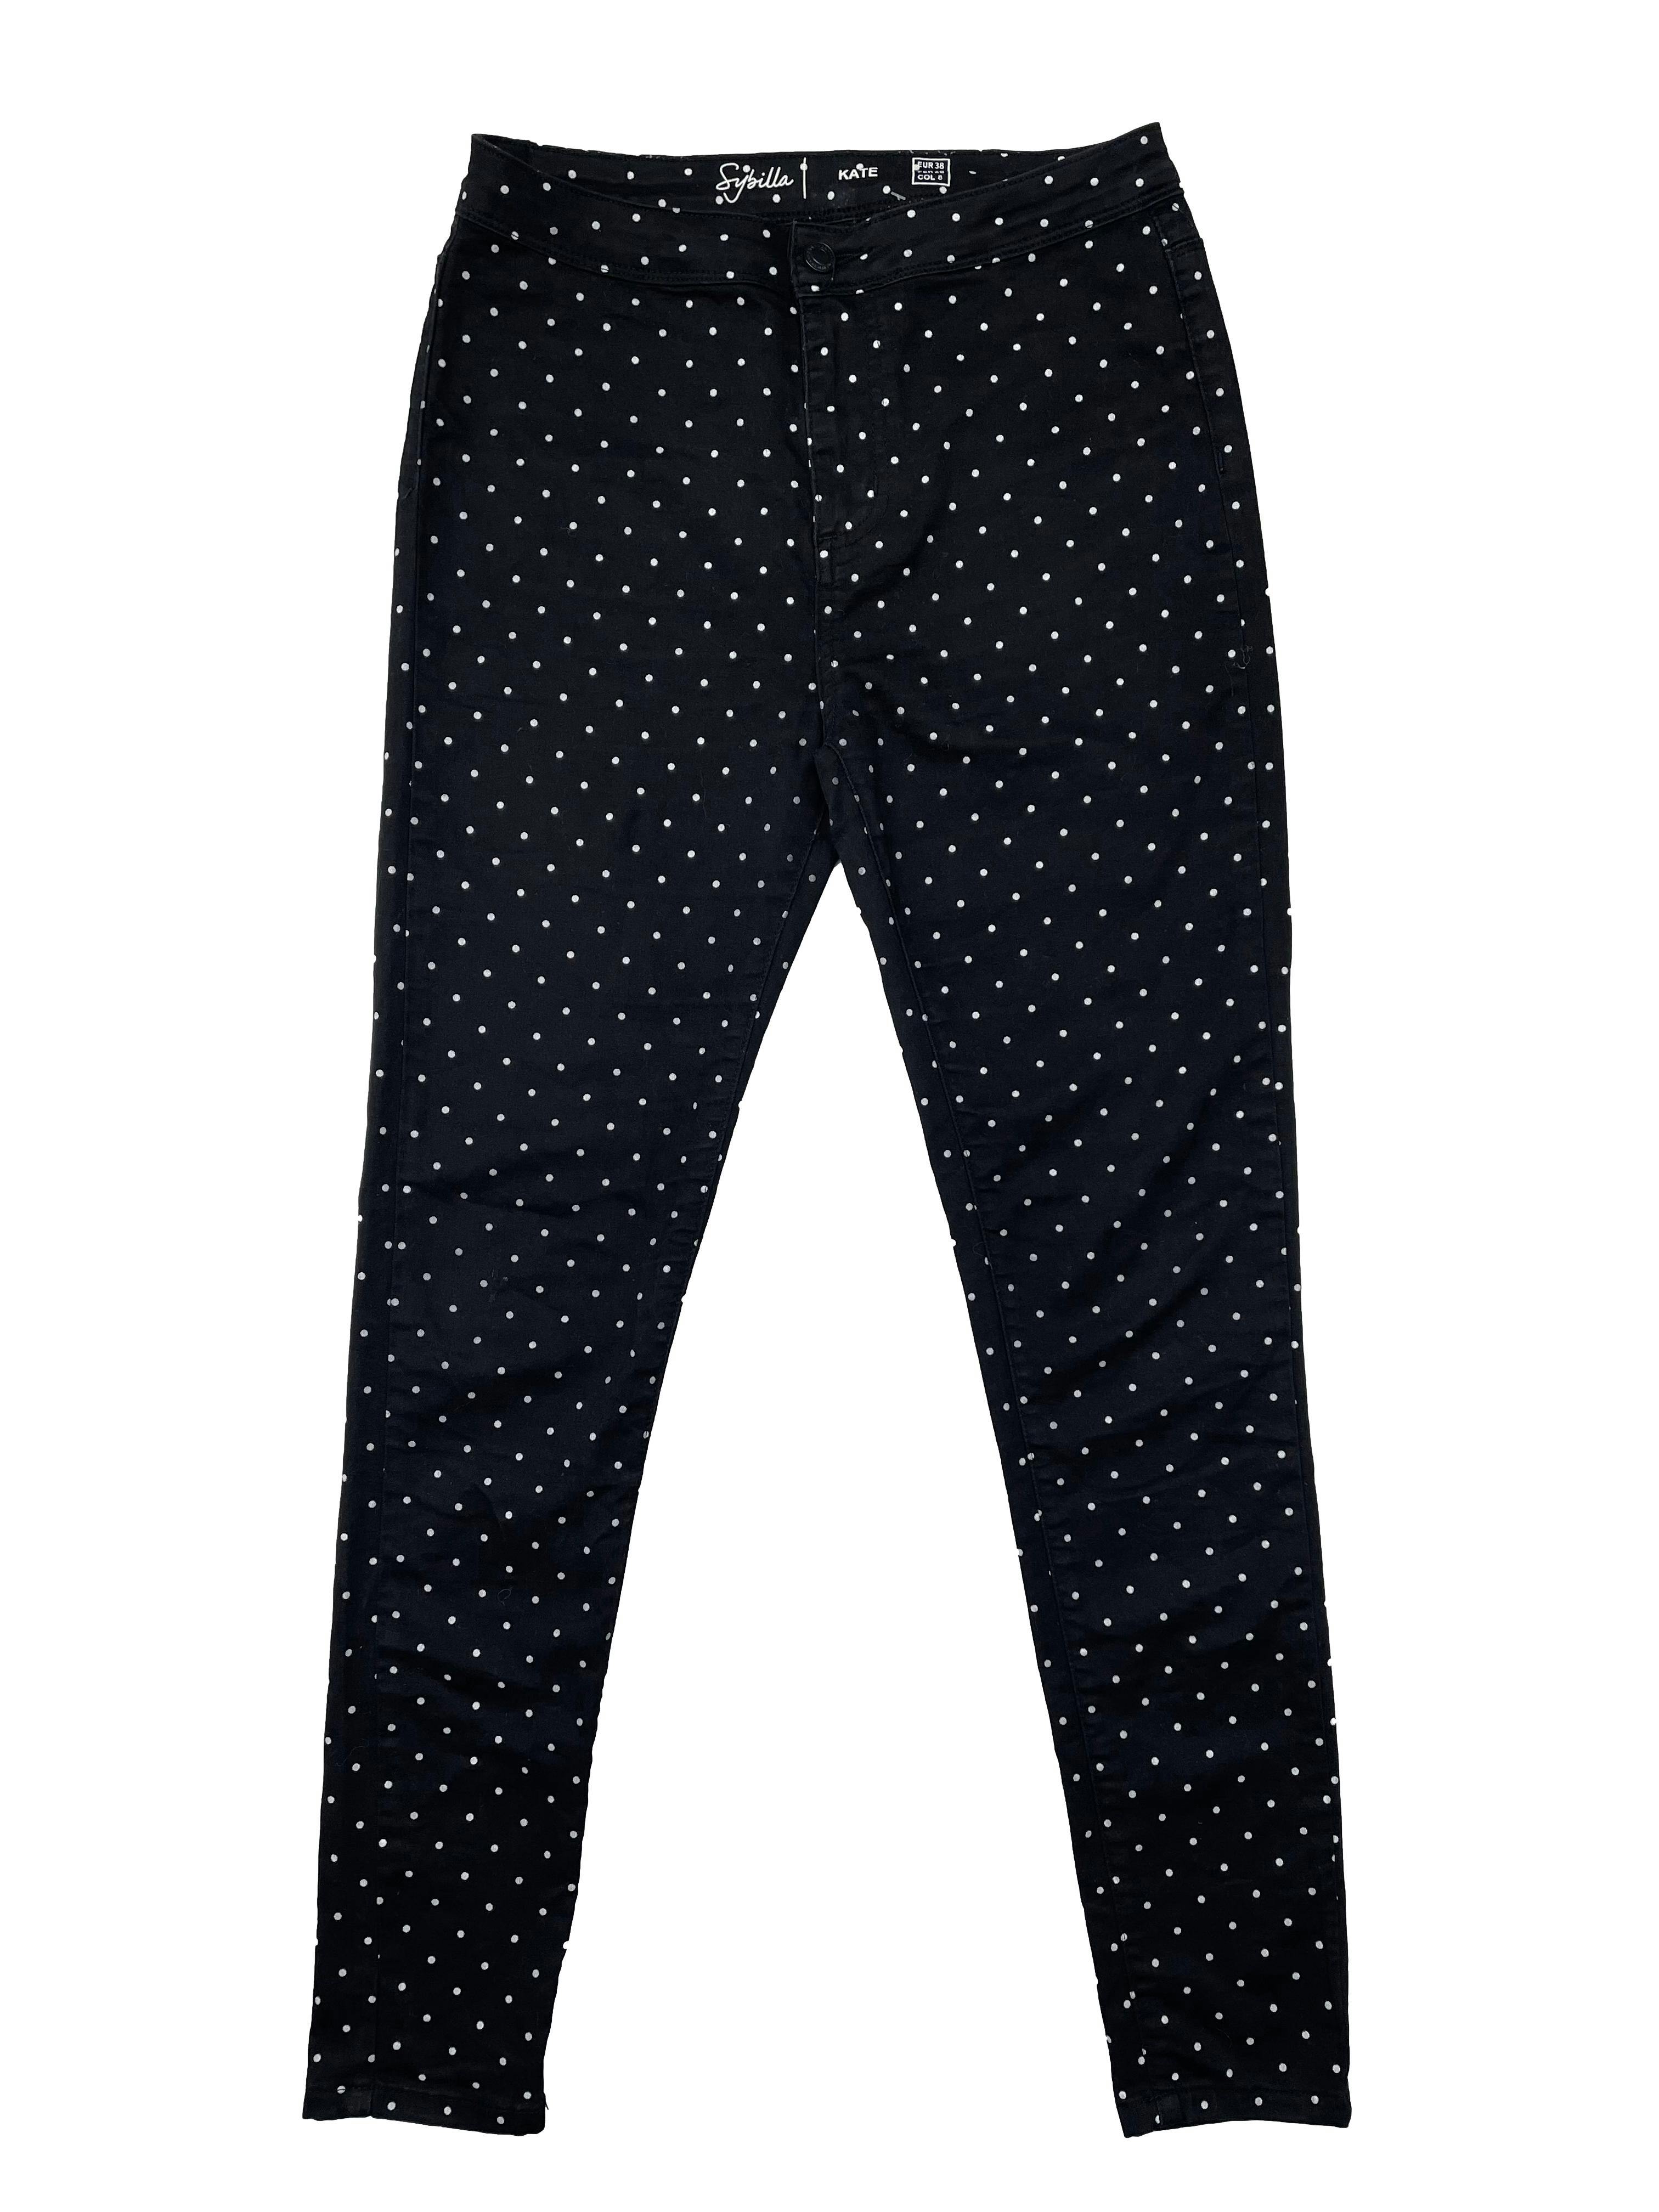 Skinny jean Sybilla negro con polka dots blancos, tiro alto. Cintura 70cm Tiro 26cm Largo 95cm